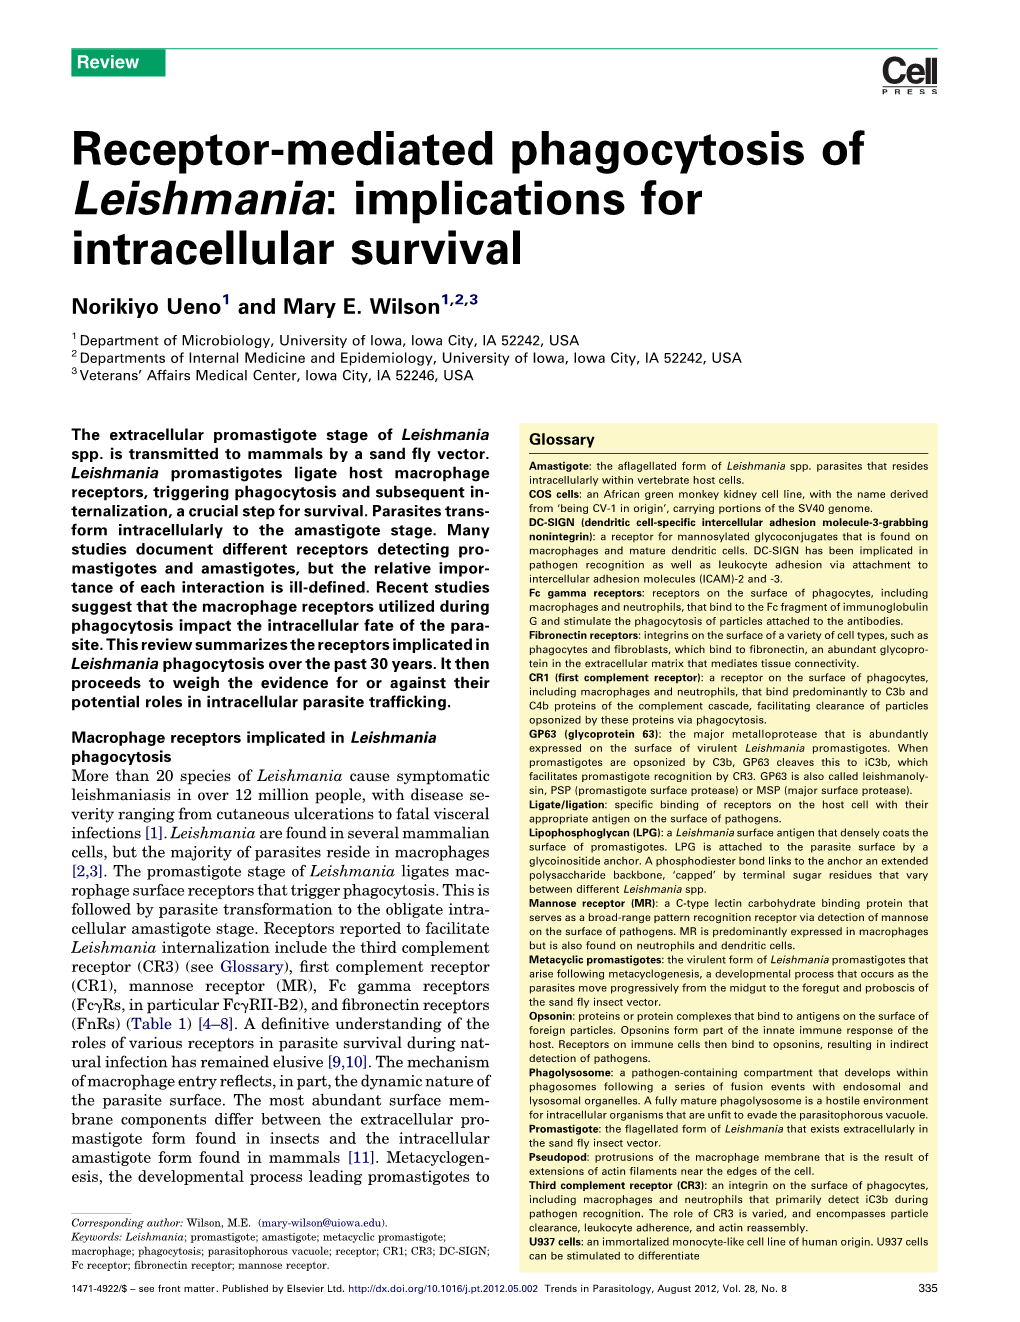 Receptor-Mediated Phagocytosis of Leishmania: Implications For